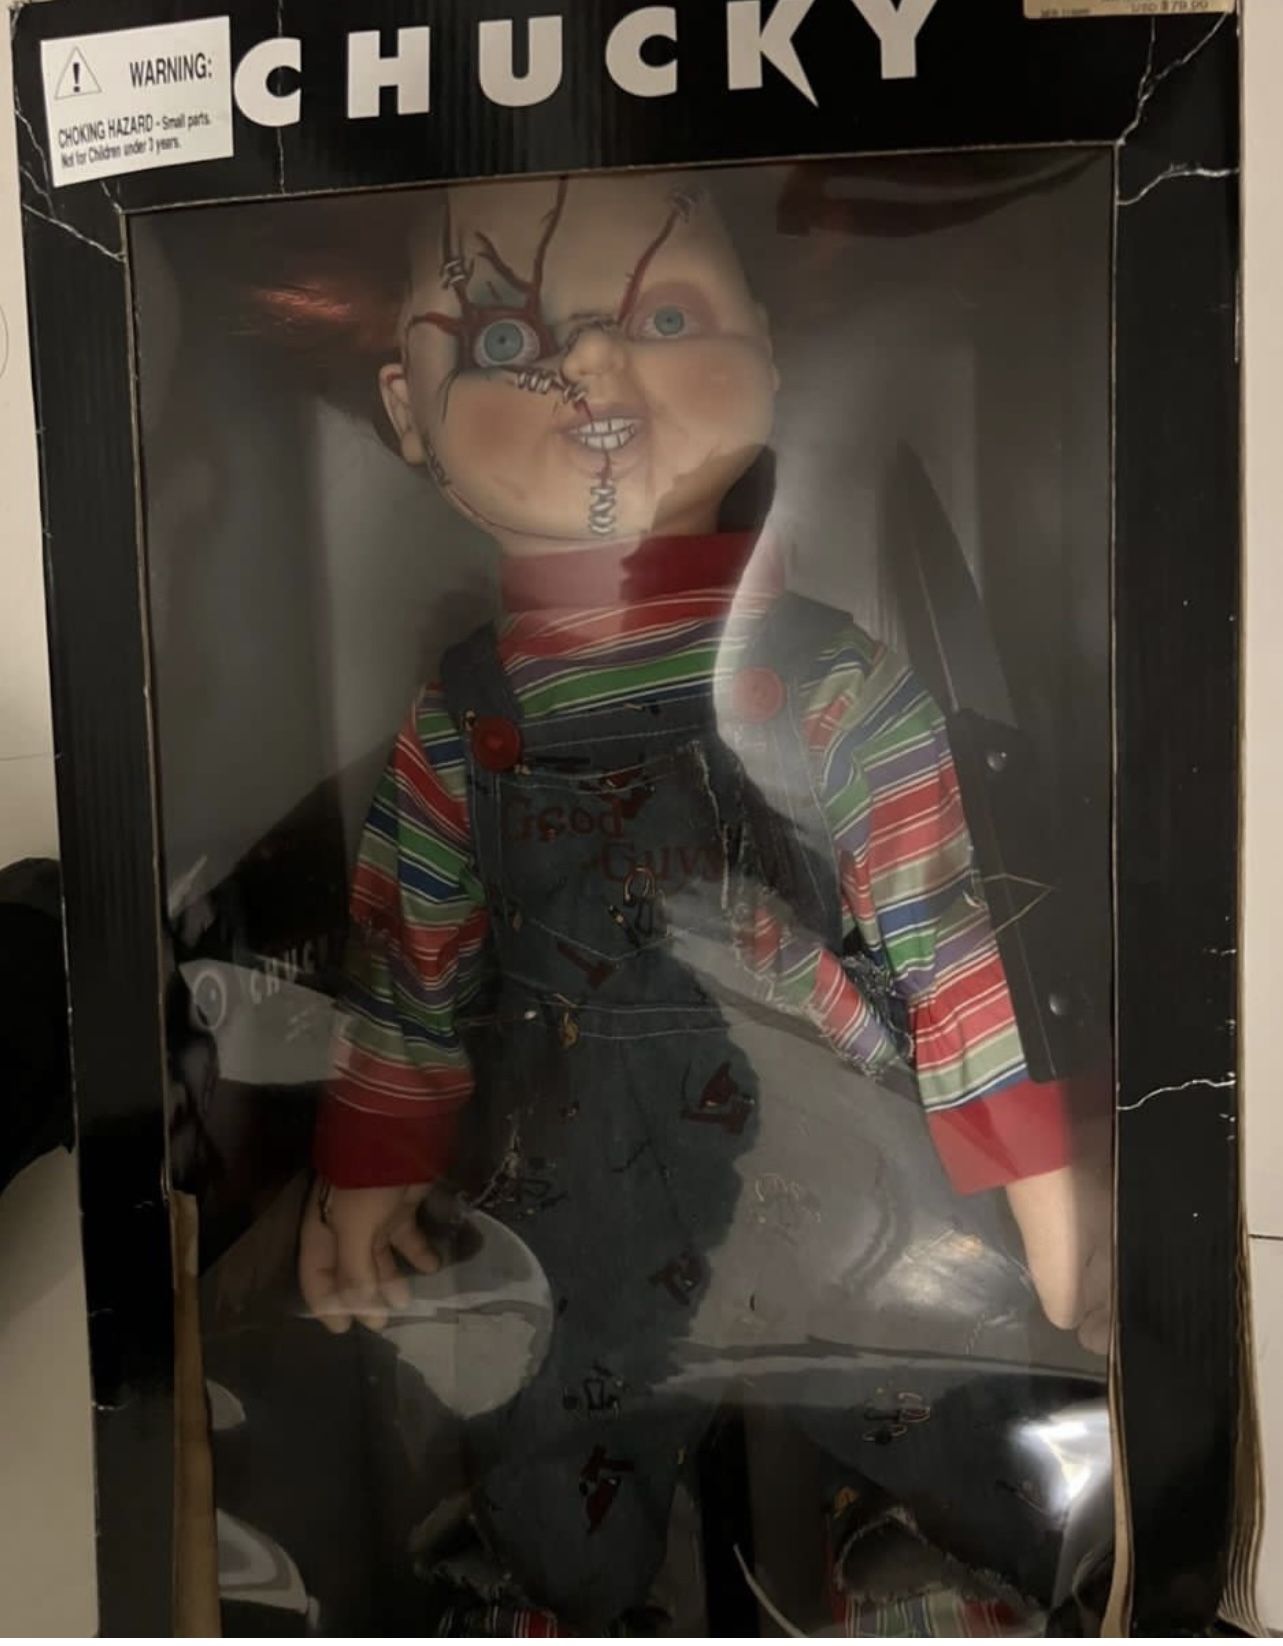 Hallowen Chucky Doll Original Edition Limited 